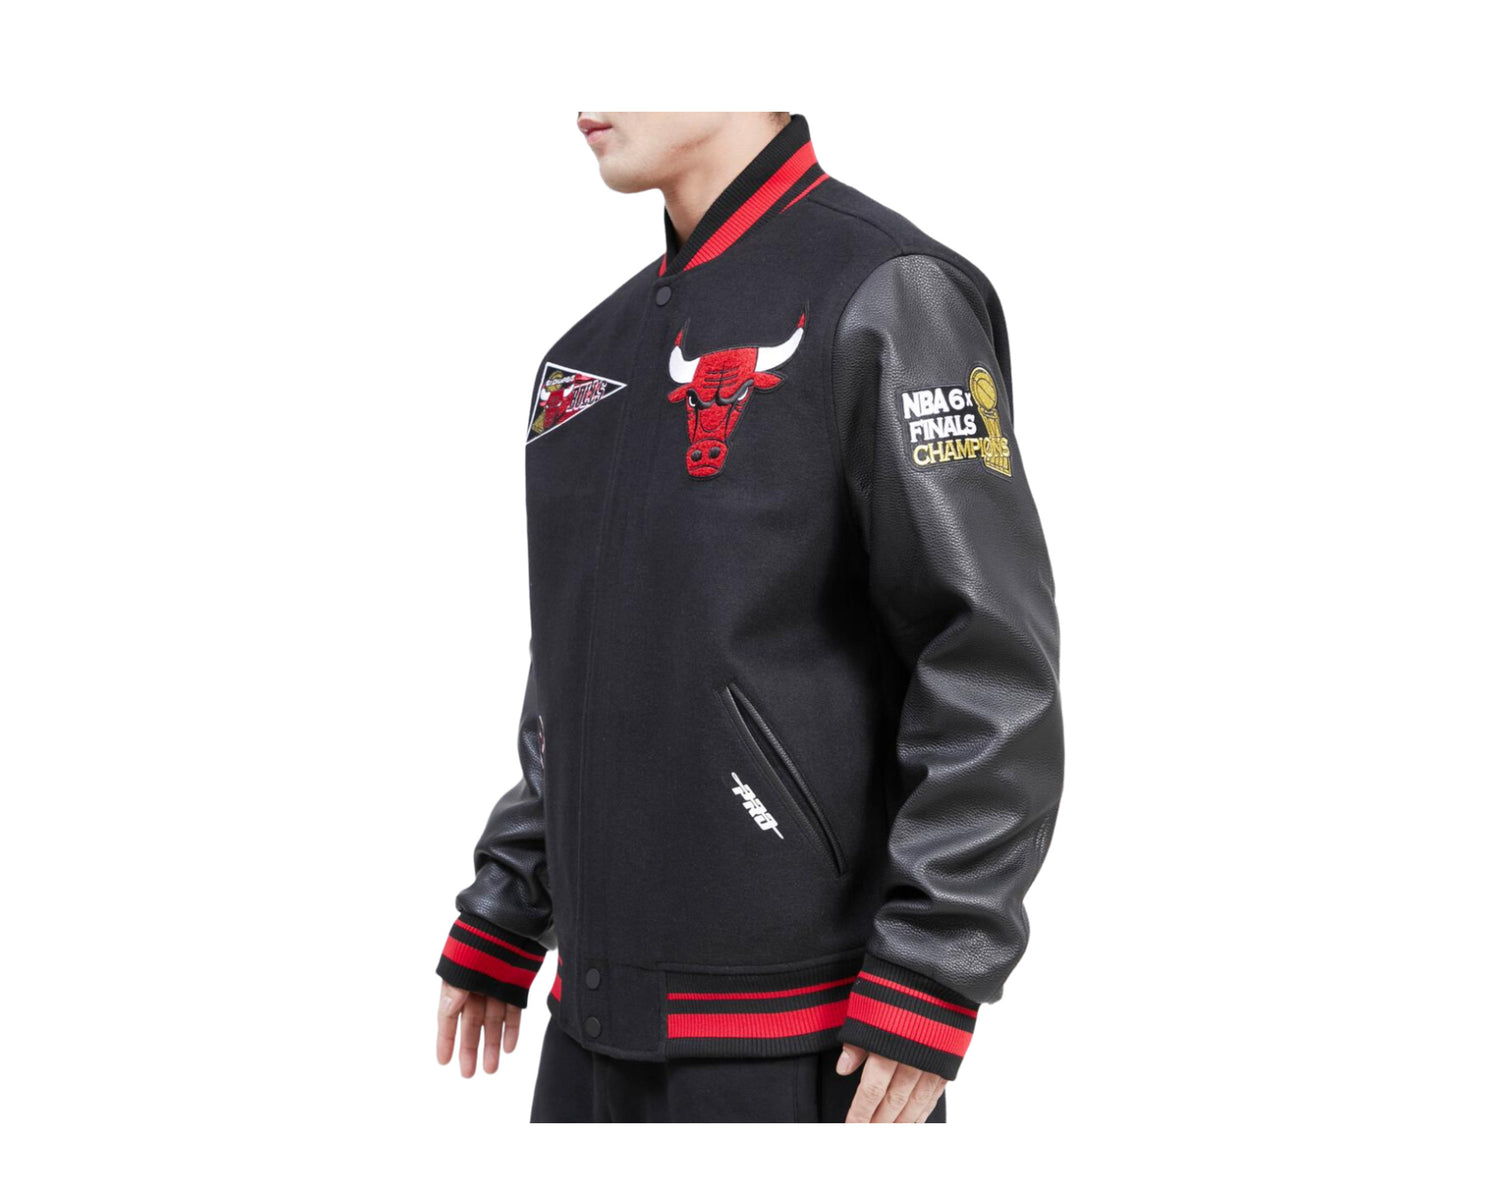 Pro Standard NBA Chicago Bulls Retro Classic Varsity Men's Jacket